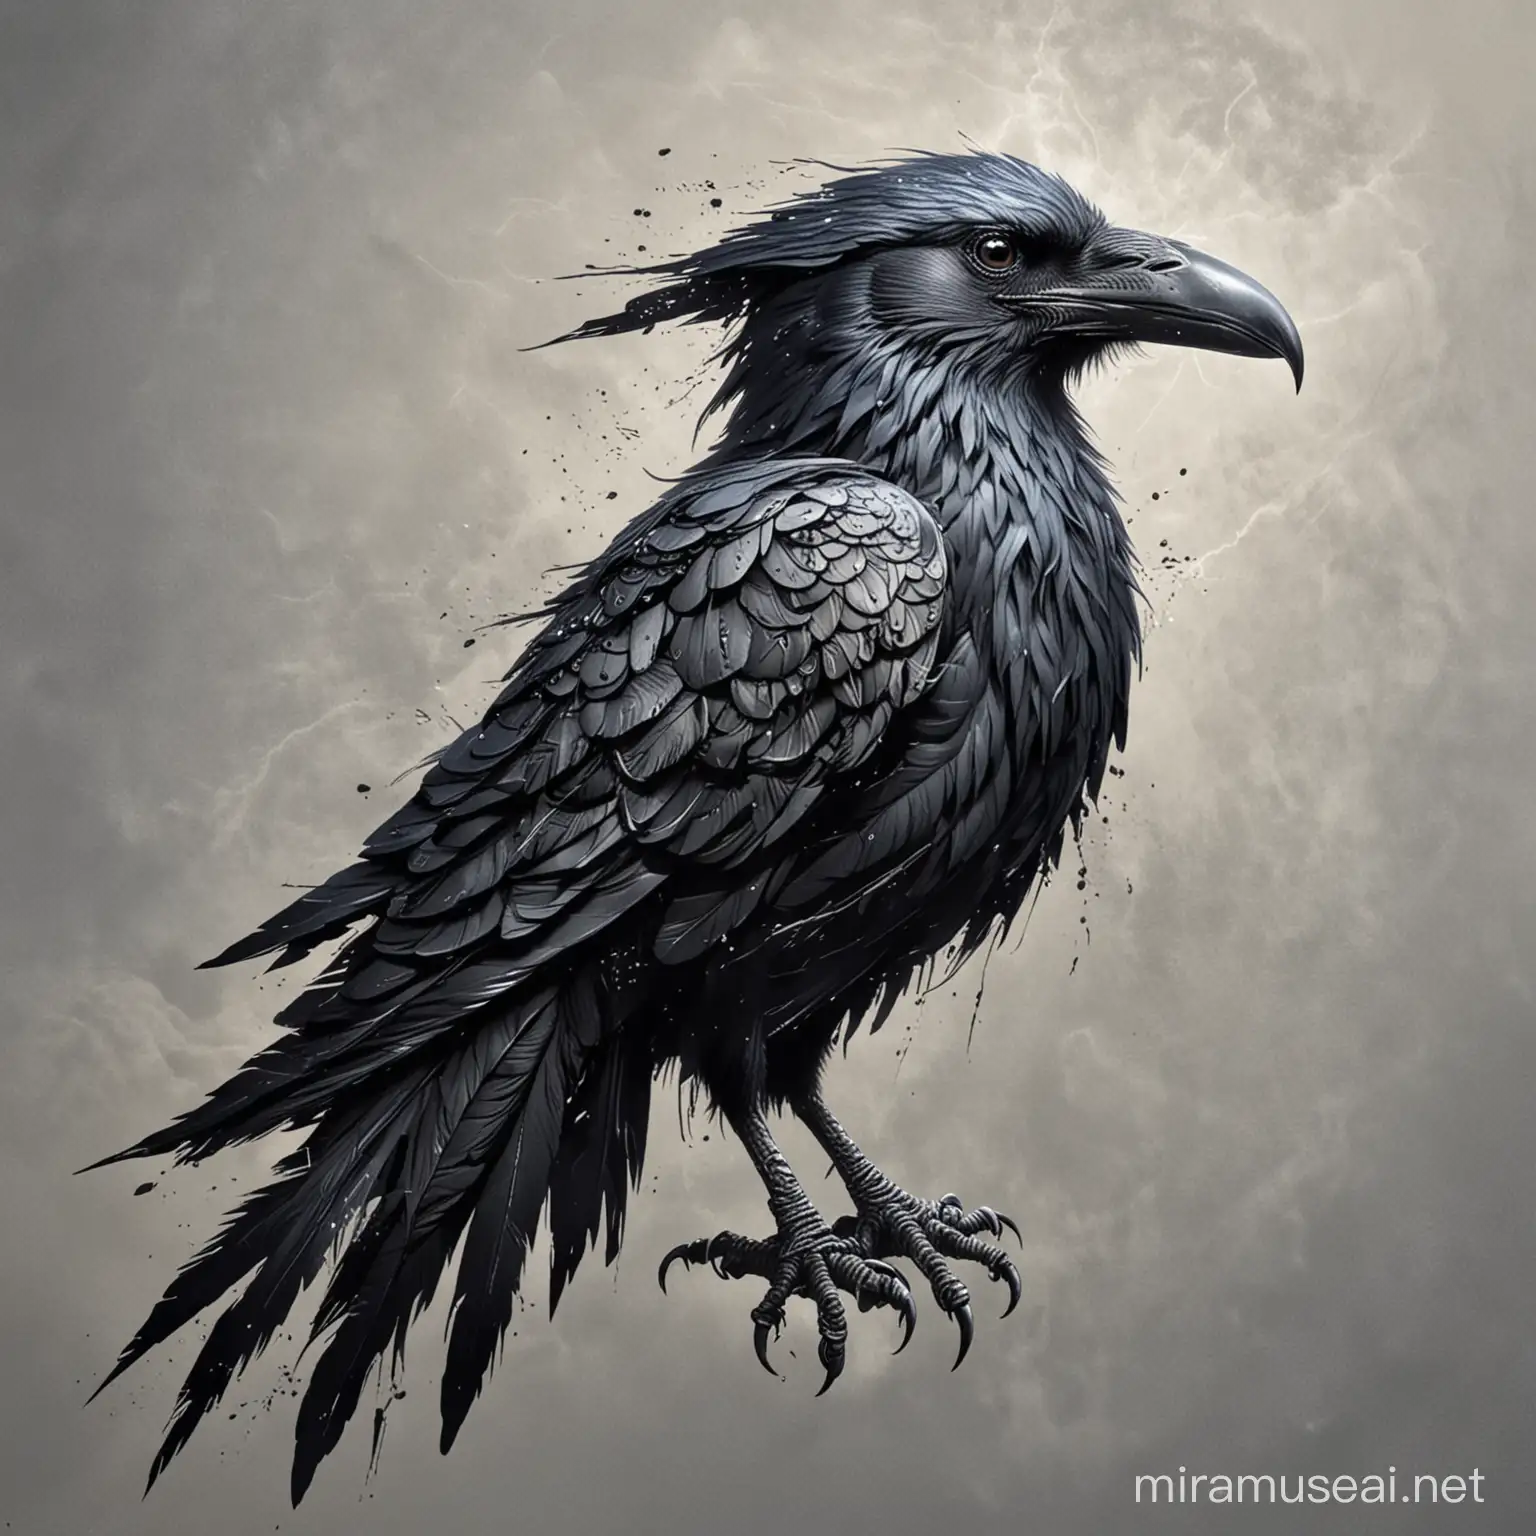 thunder bird in crow shape
